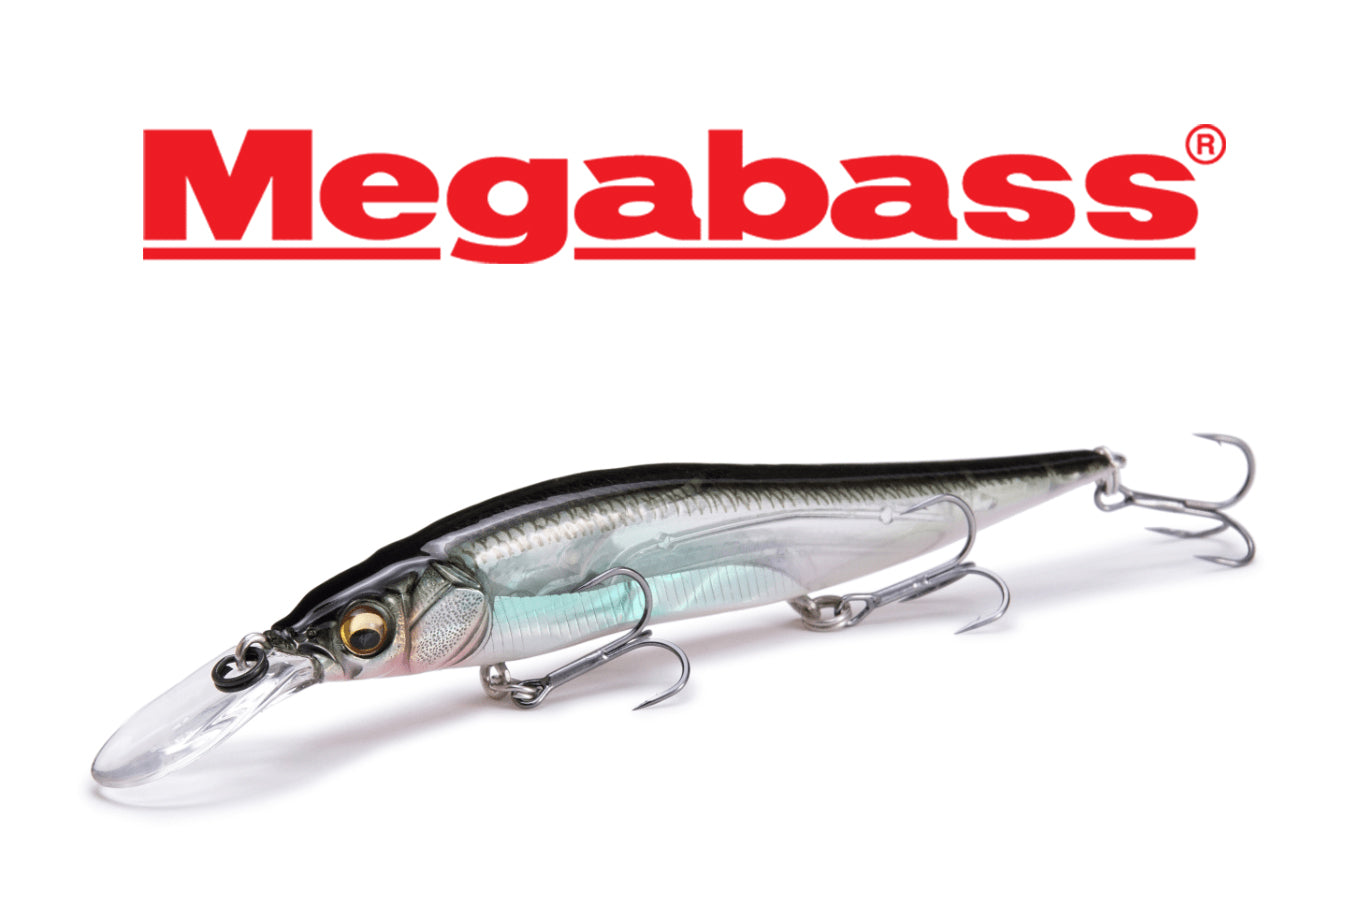 Megabass suspending hook upgrade question